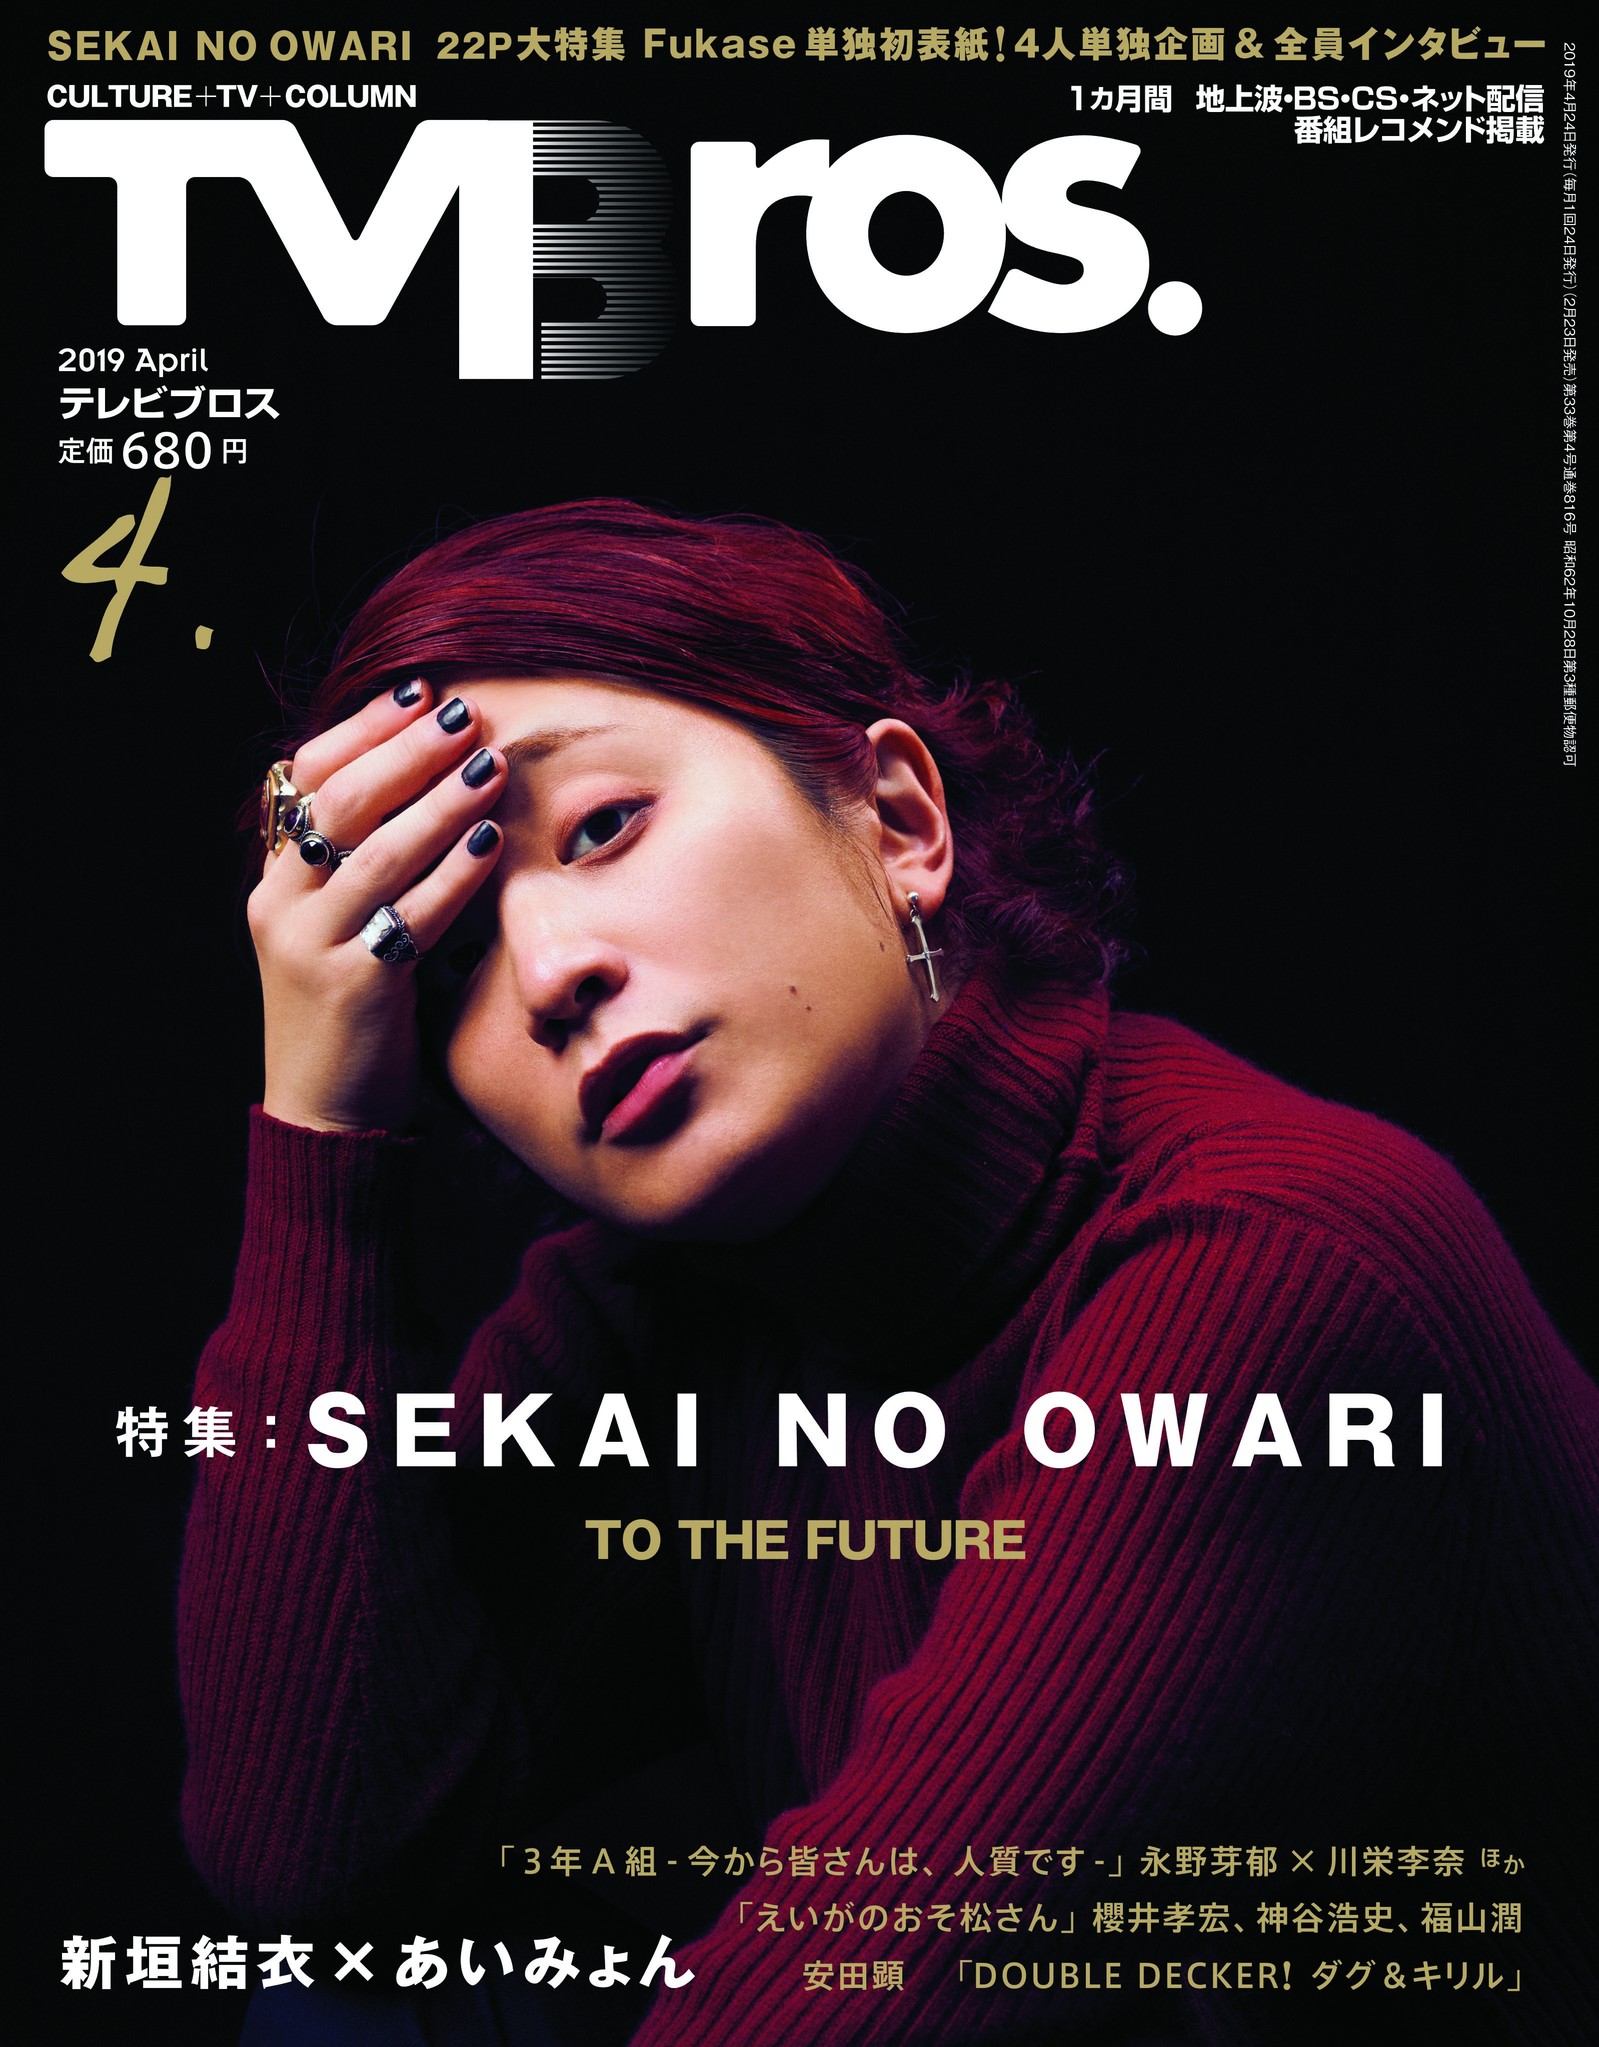 Fukaseが単独初表紙 Tv Bros 4月号はsekai No Owari 全22ページの大特集 株式会社東京ニュース通信社の プレスリリース